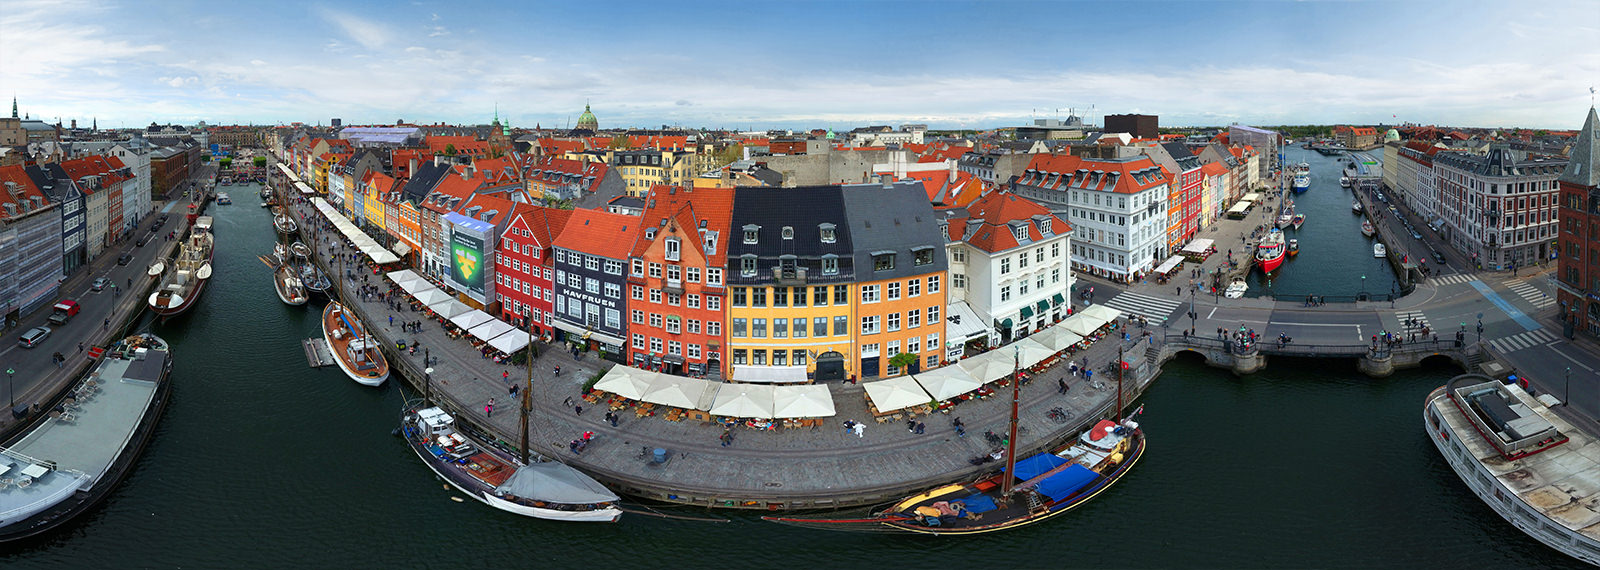 Nyhavn from the sky, Copenhagen - Virtual tour